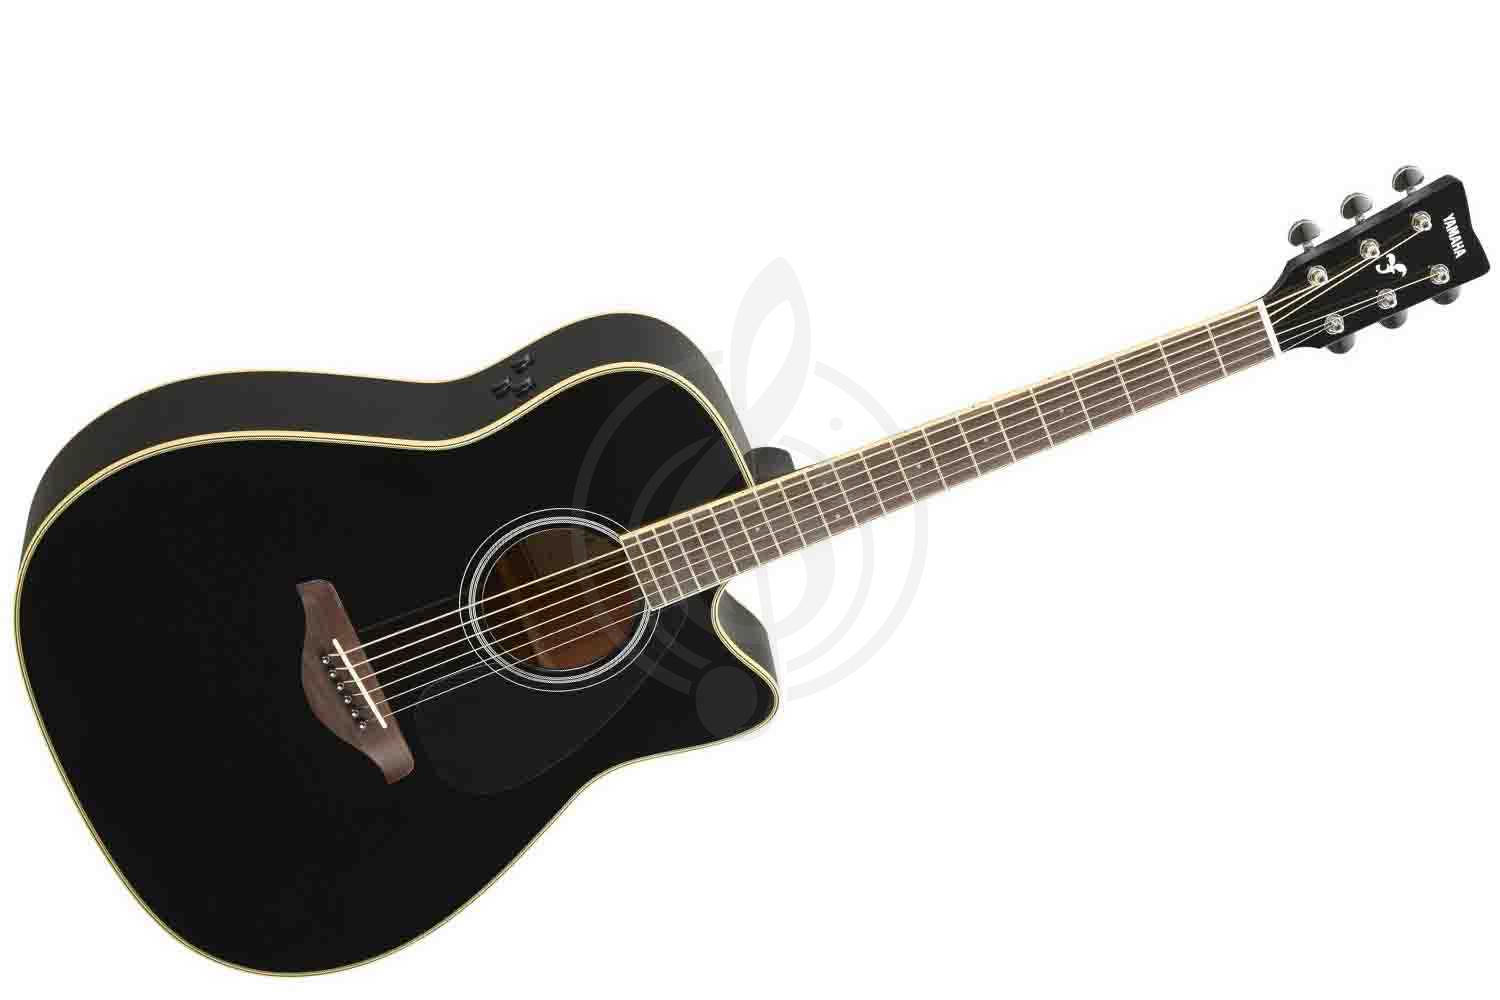 Трансакустическая гитара YAMAHA FGC-TA BLACK - трансакустическая гитара, Yamaha FGC-TA BLACK в магазине DominantaMusic - фото 1